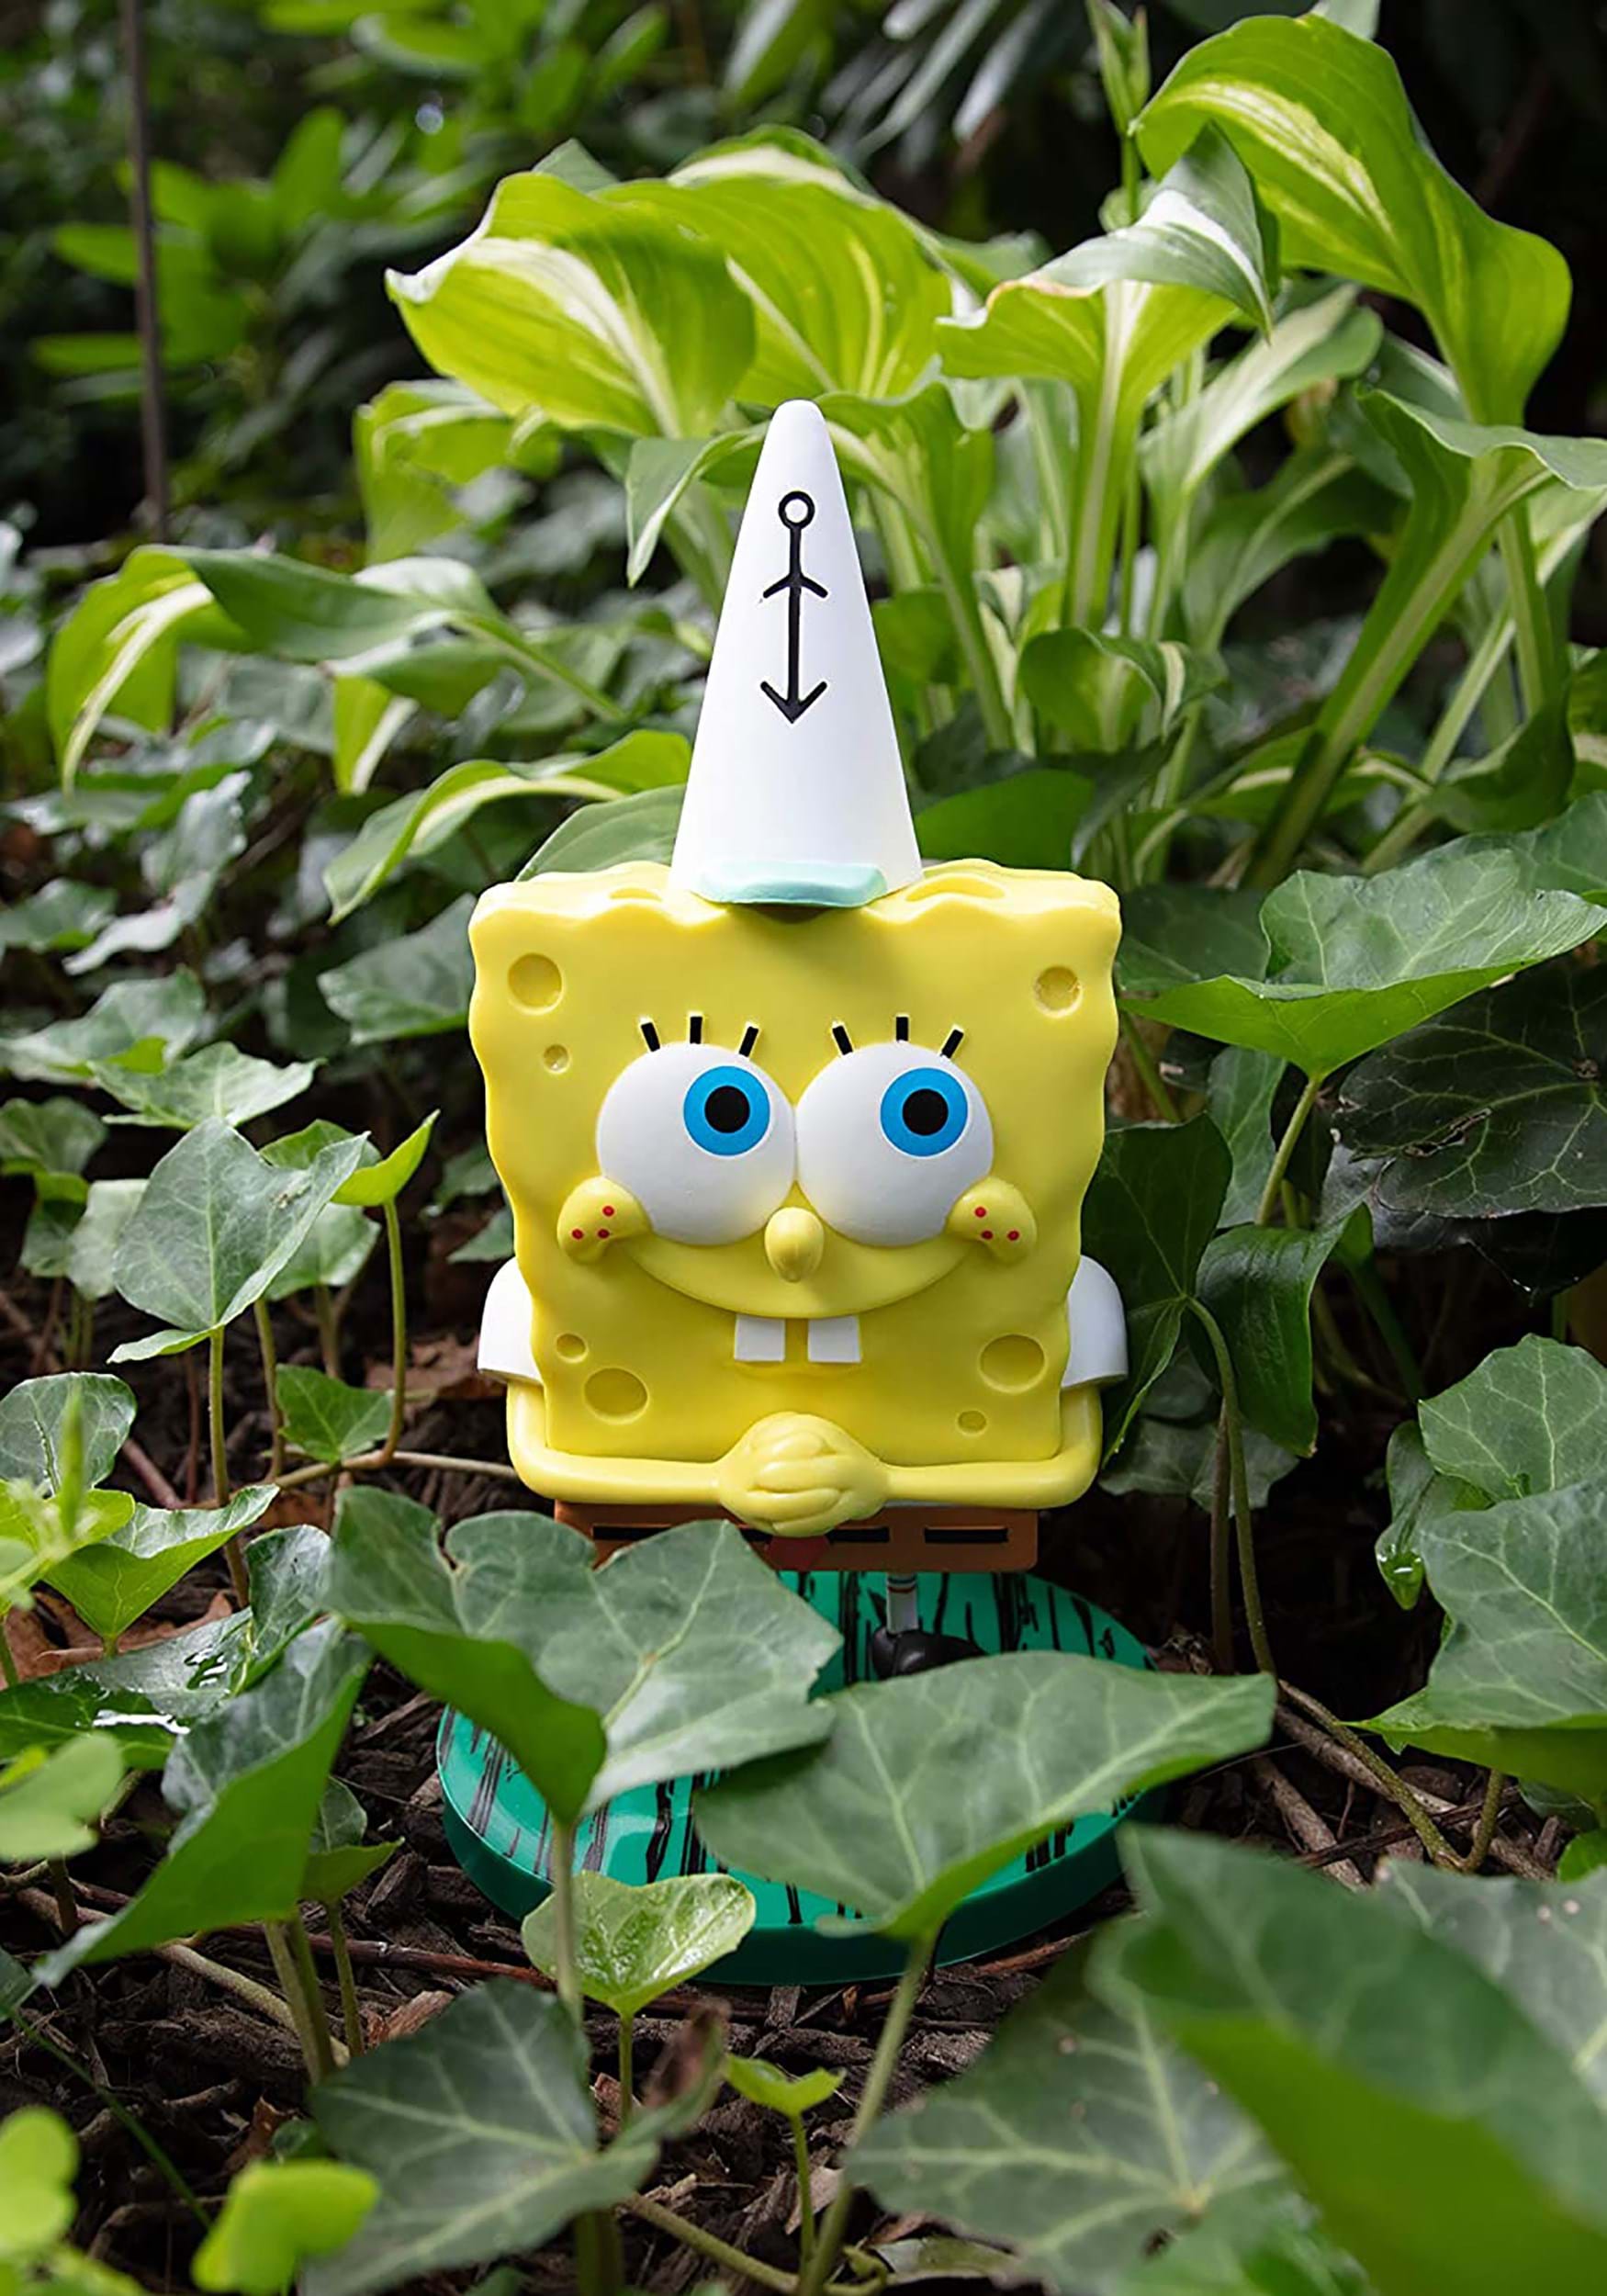 Spongebob SquarePants Garden Gnome